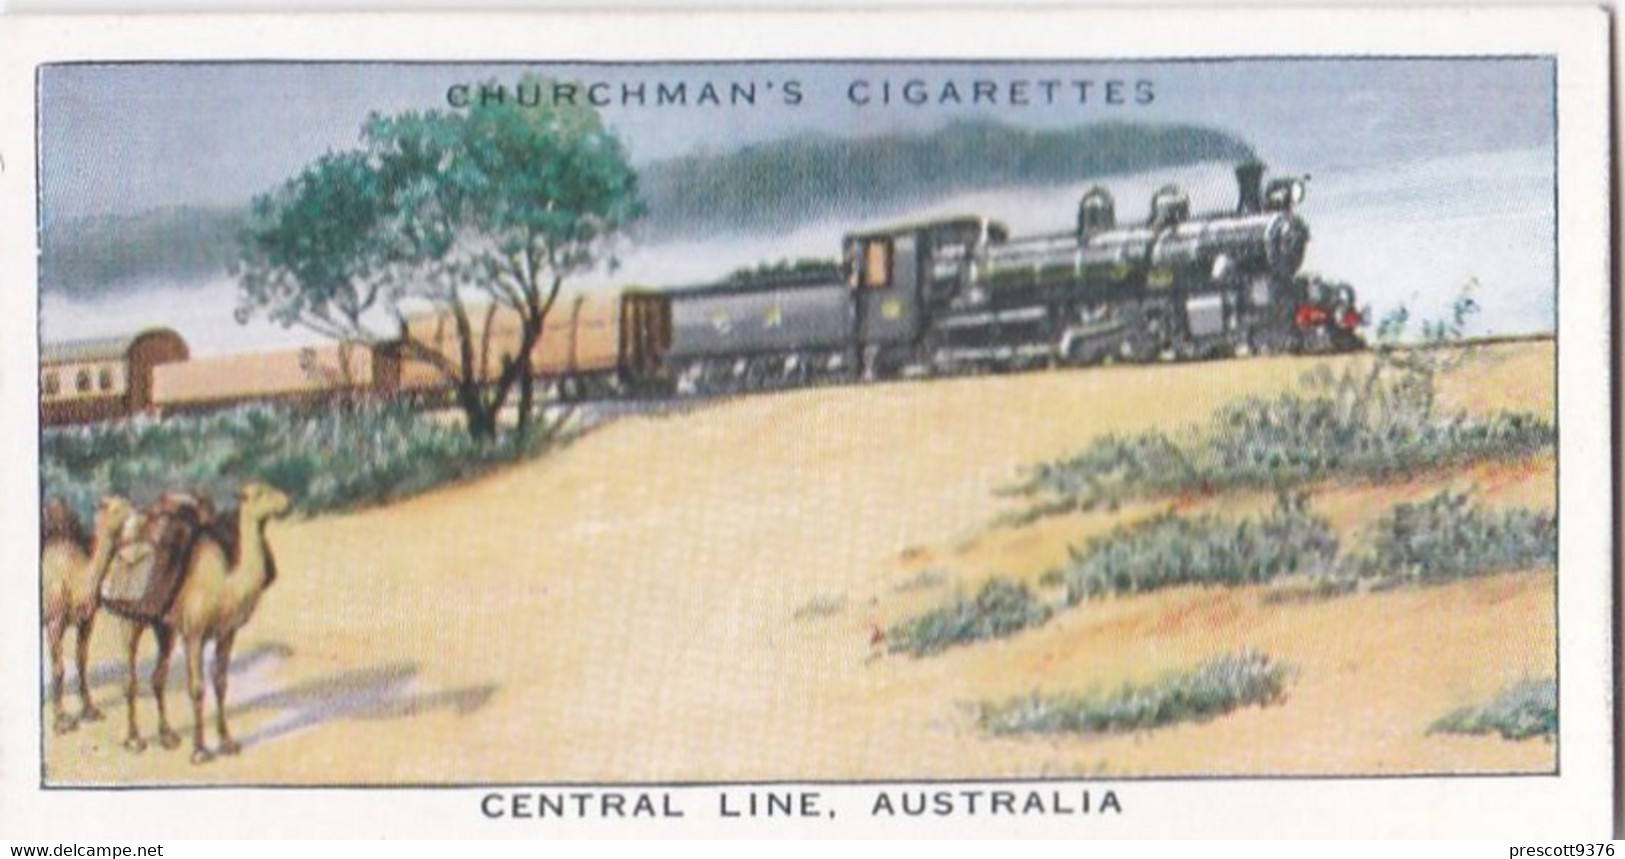 Wonderful Railway Travel, 1937 - 6 Central Line, Australia   - Churchman Cigarette Card - Trains - Churchman